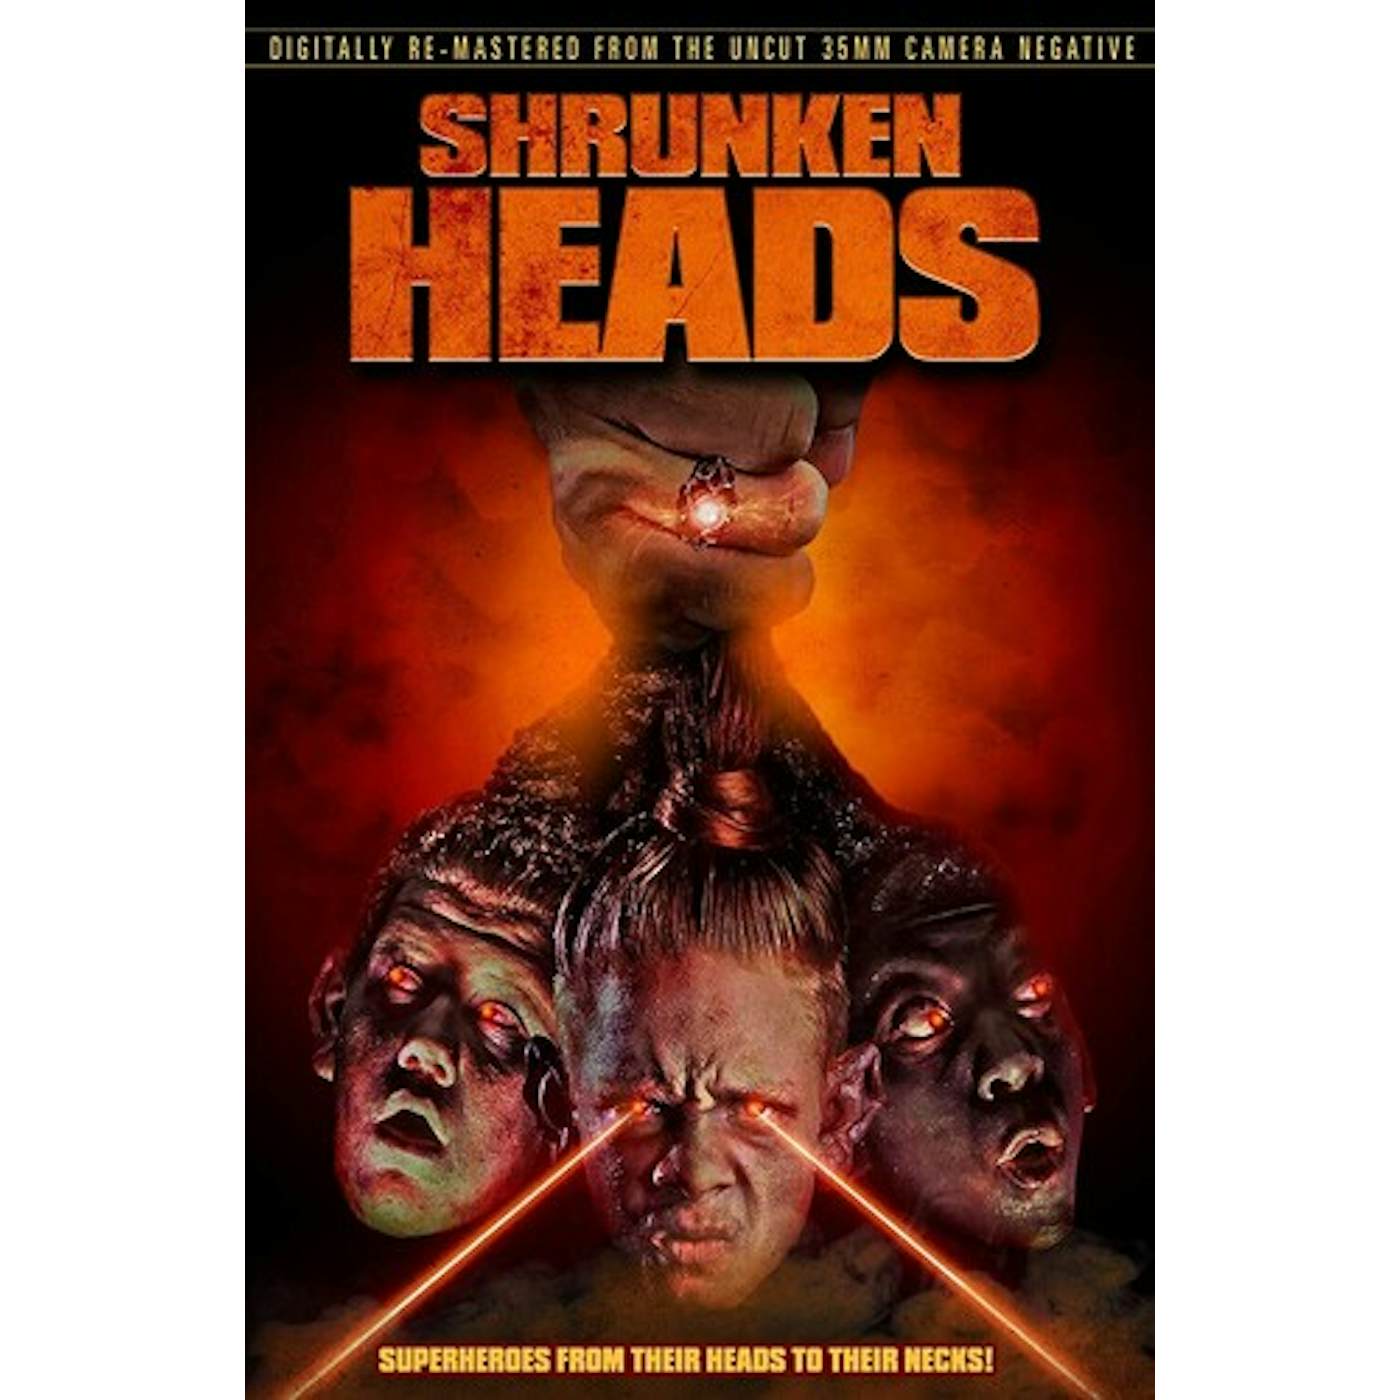 The Shrünken Heads DVD